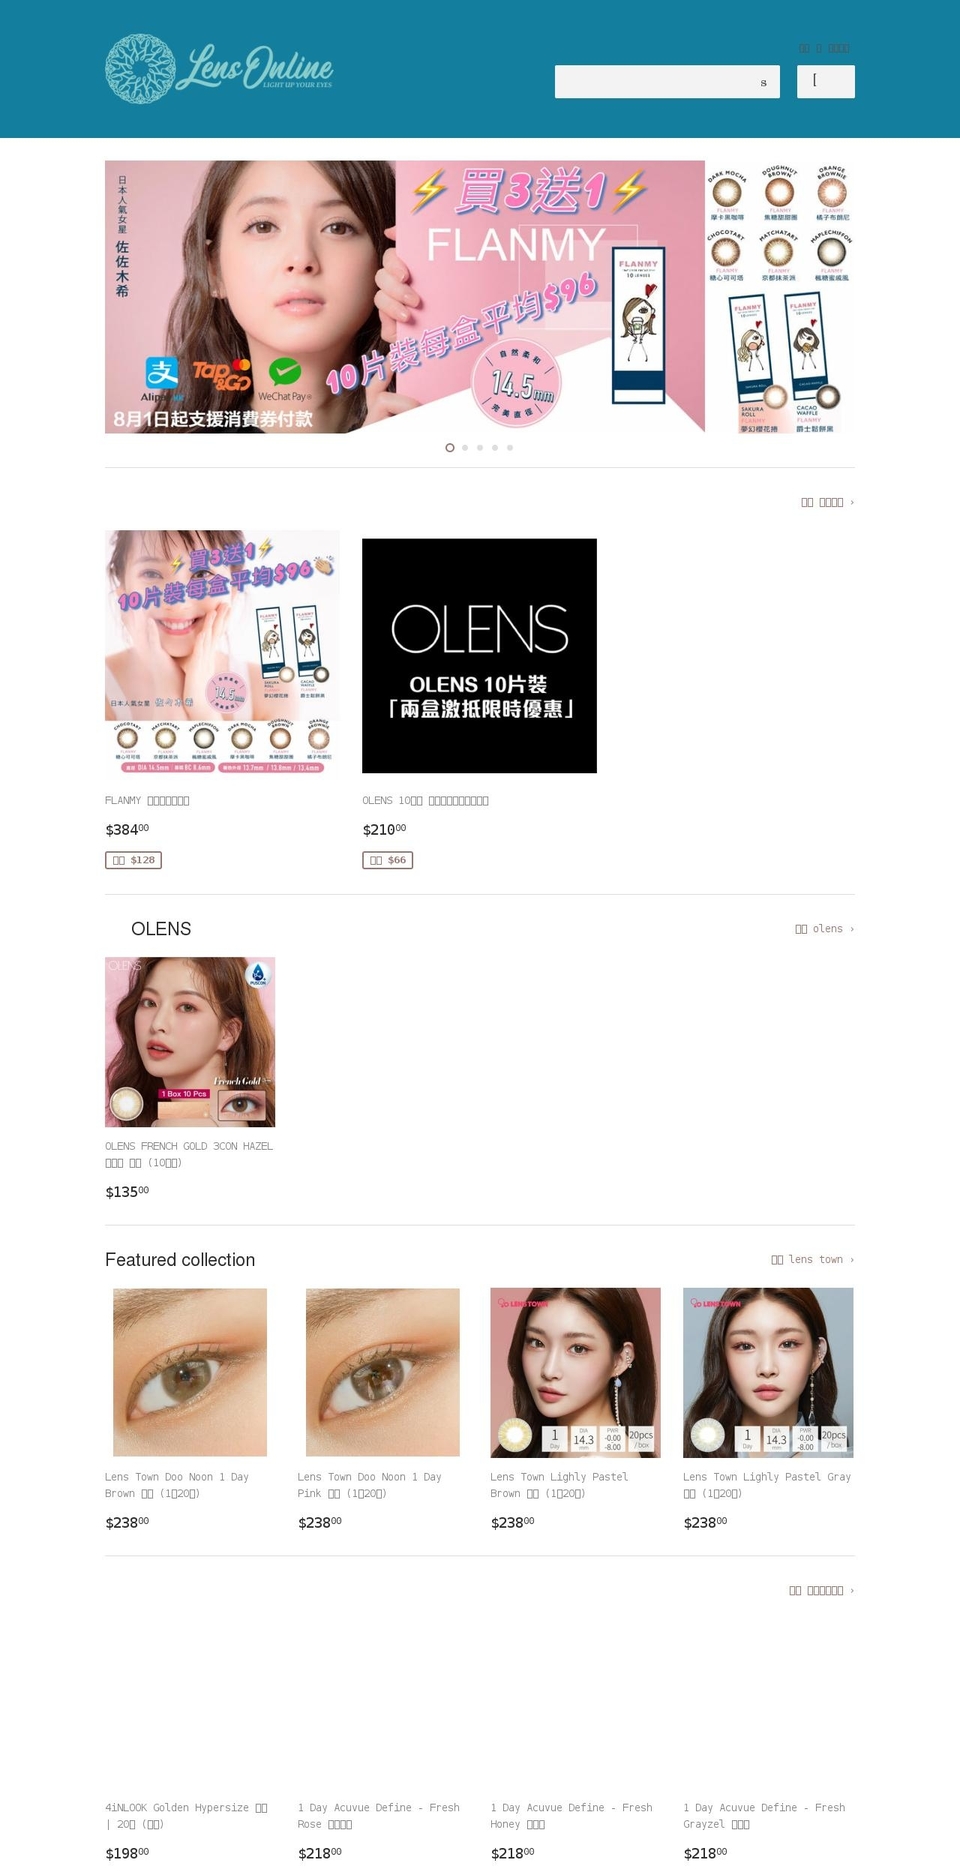 lensonline.hk shopify website screenshot